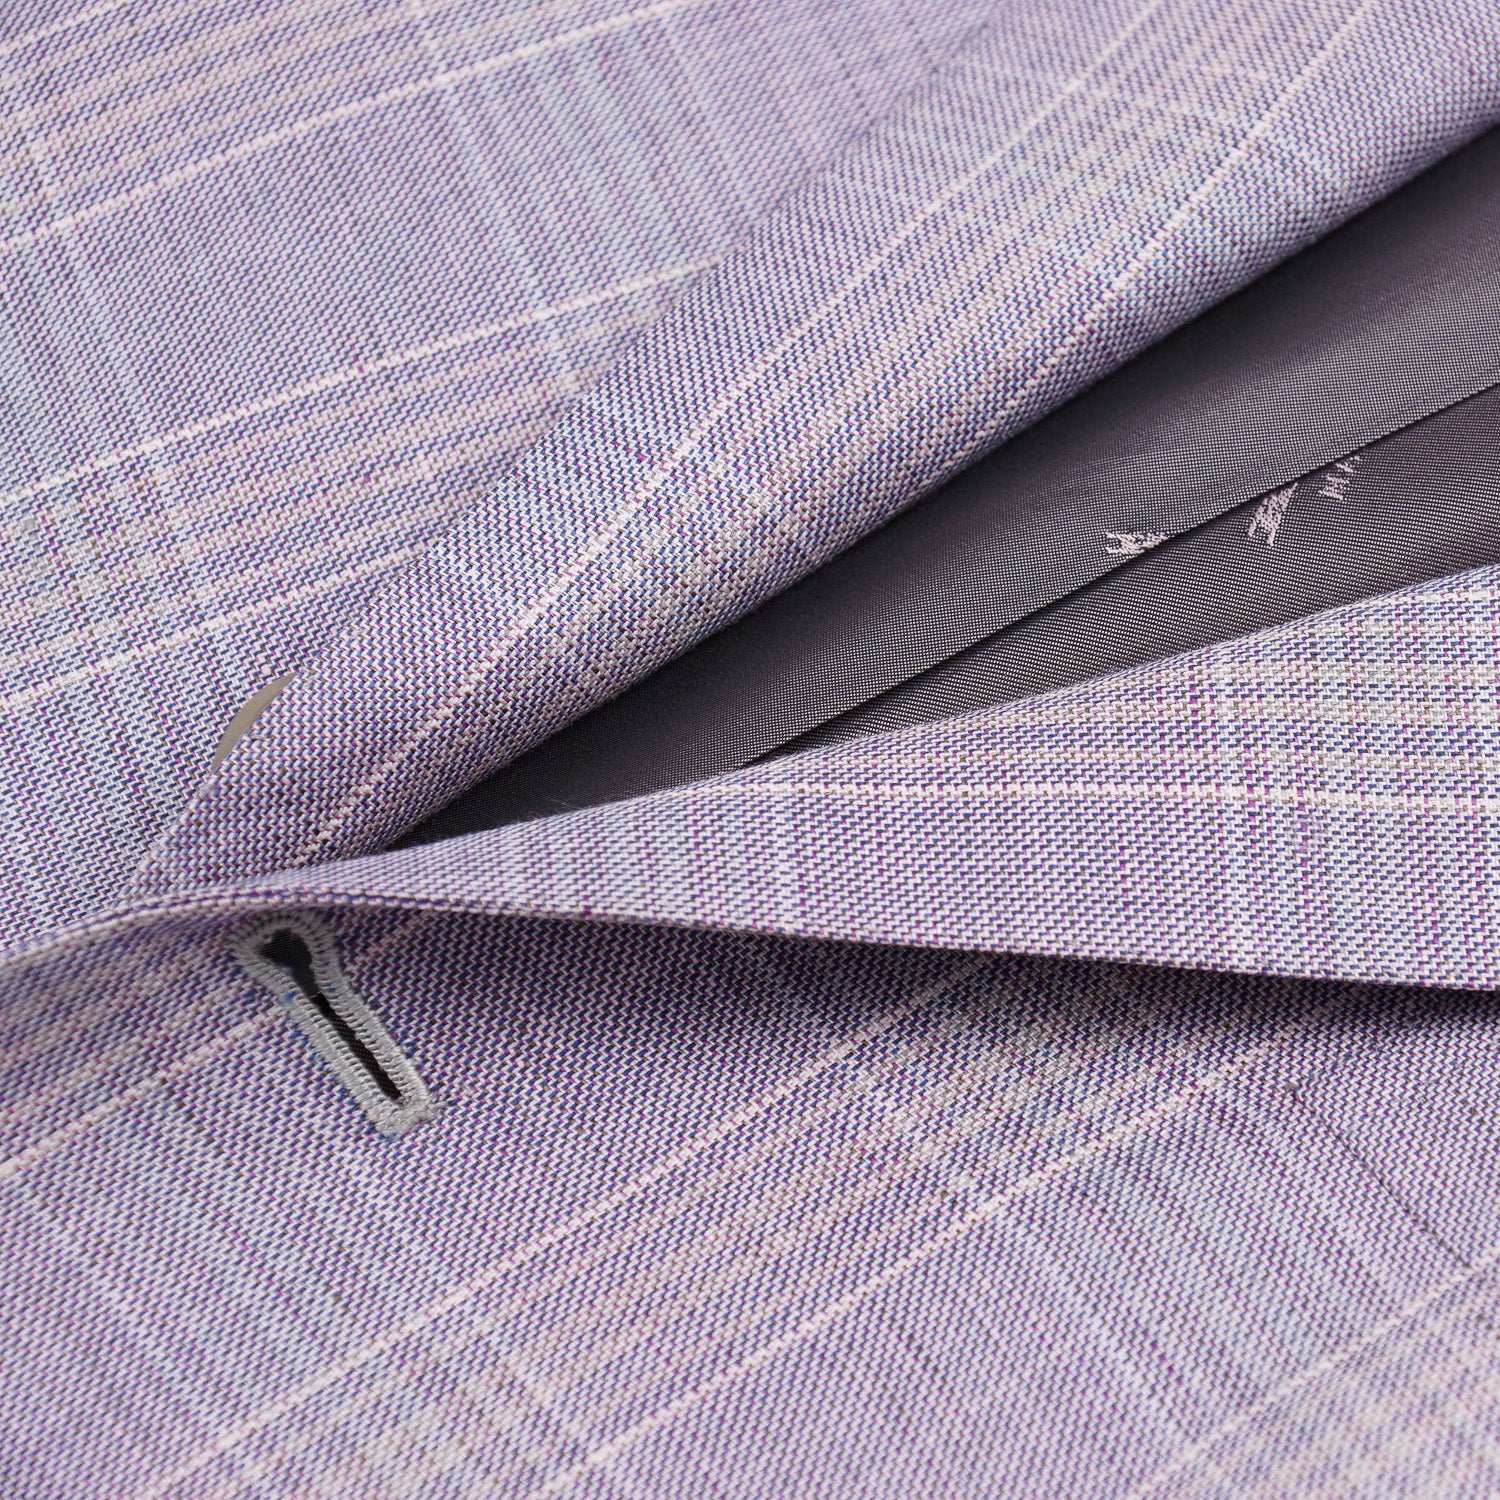 Kiton Cashmere and Linen Sport Coat - Top Shelf Apparel